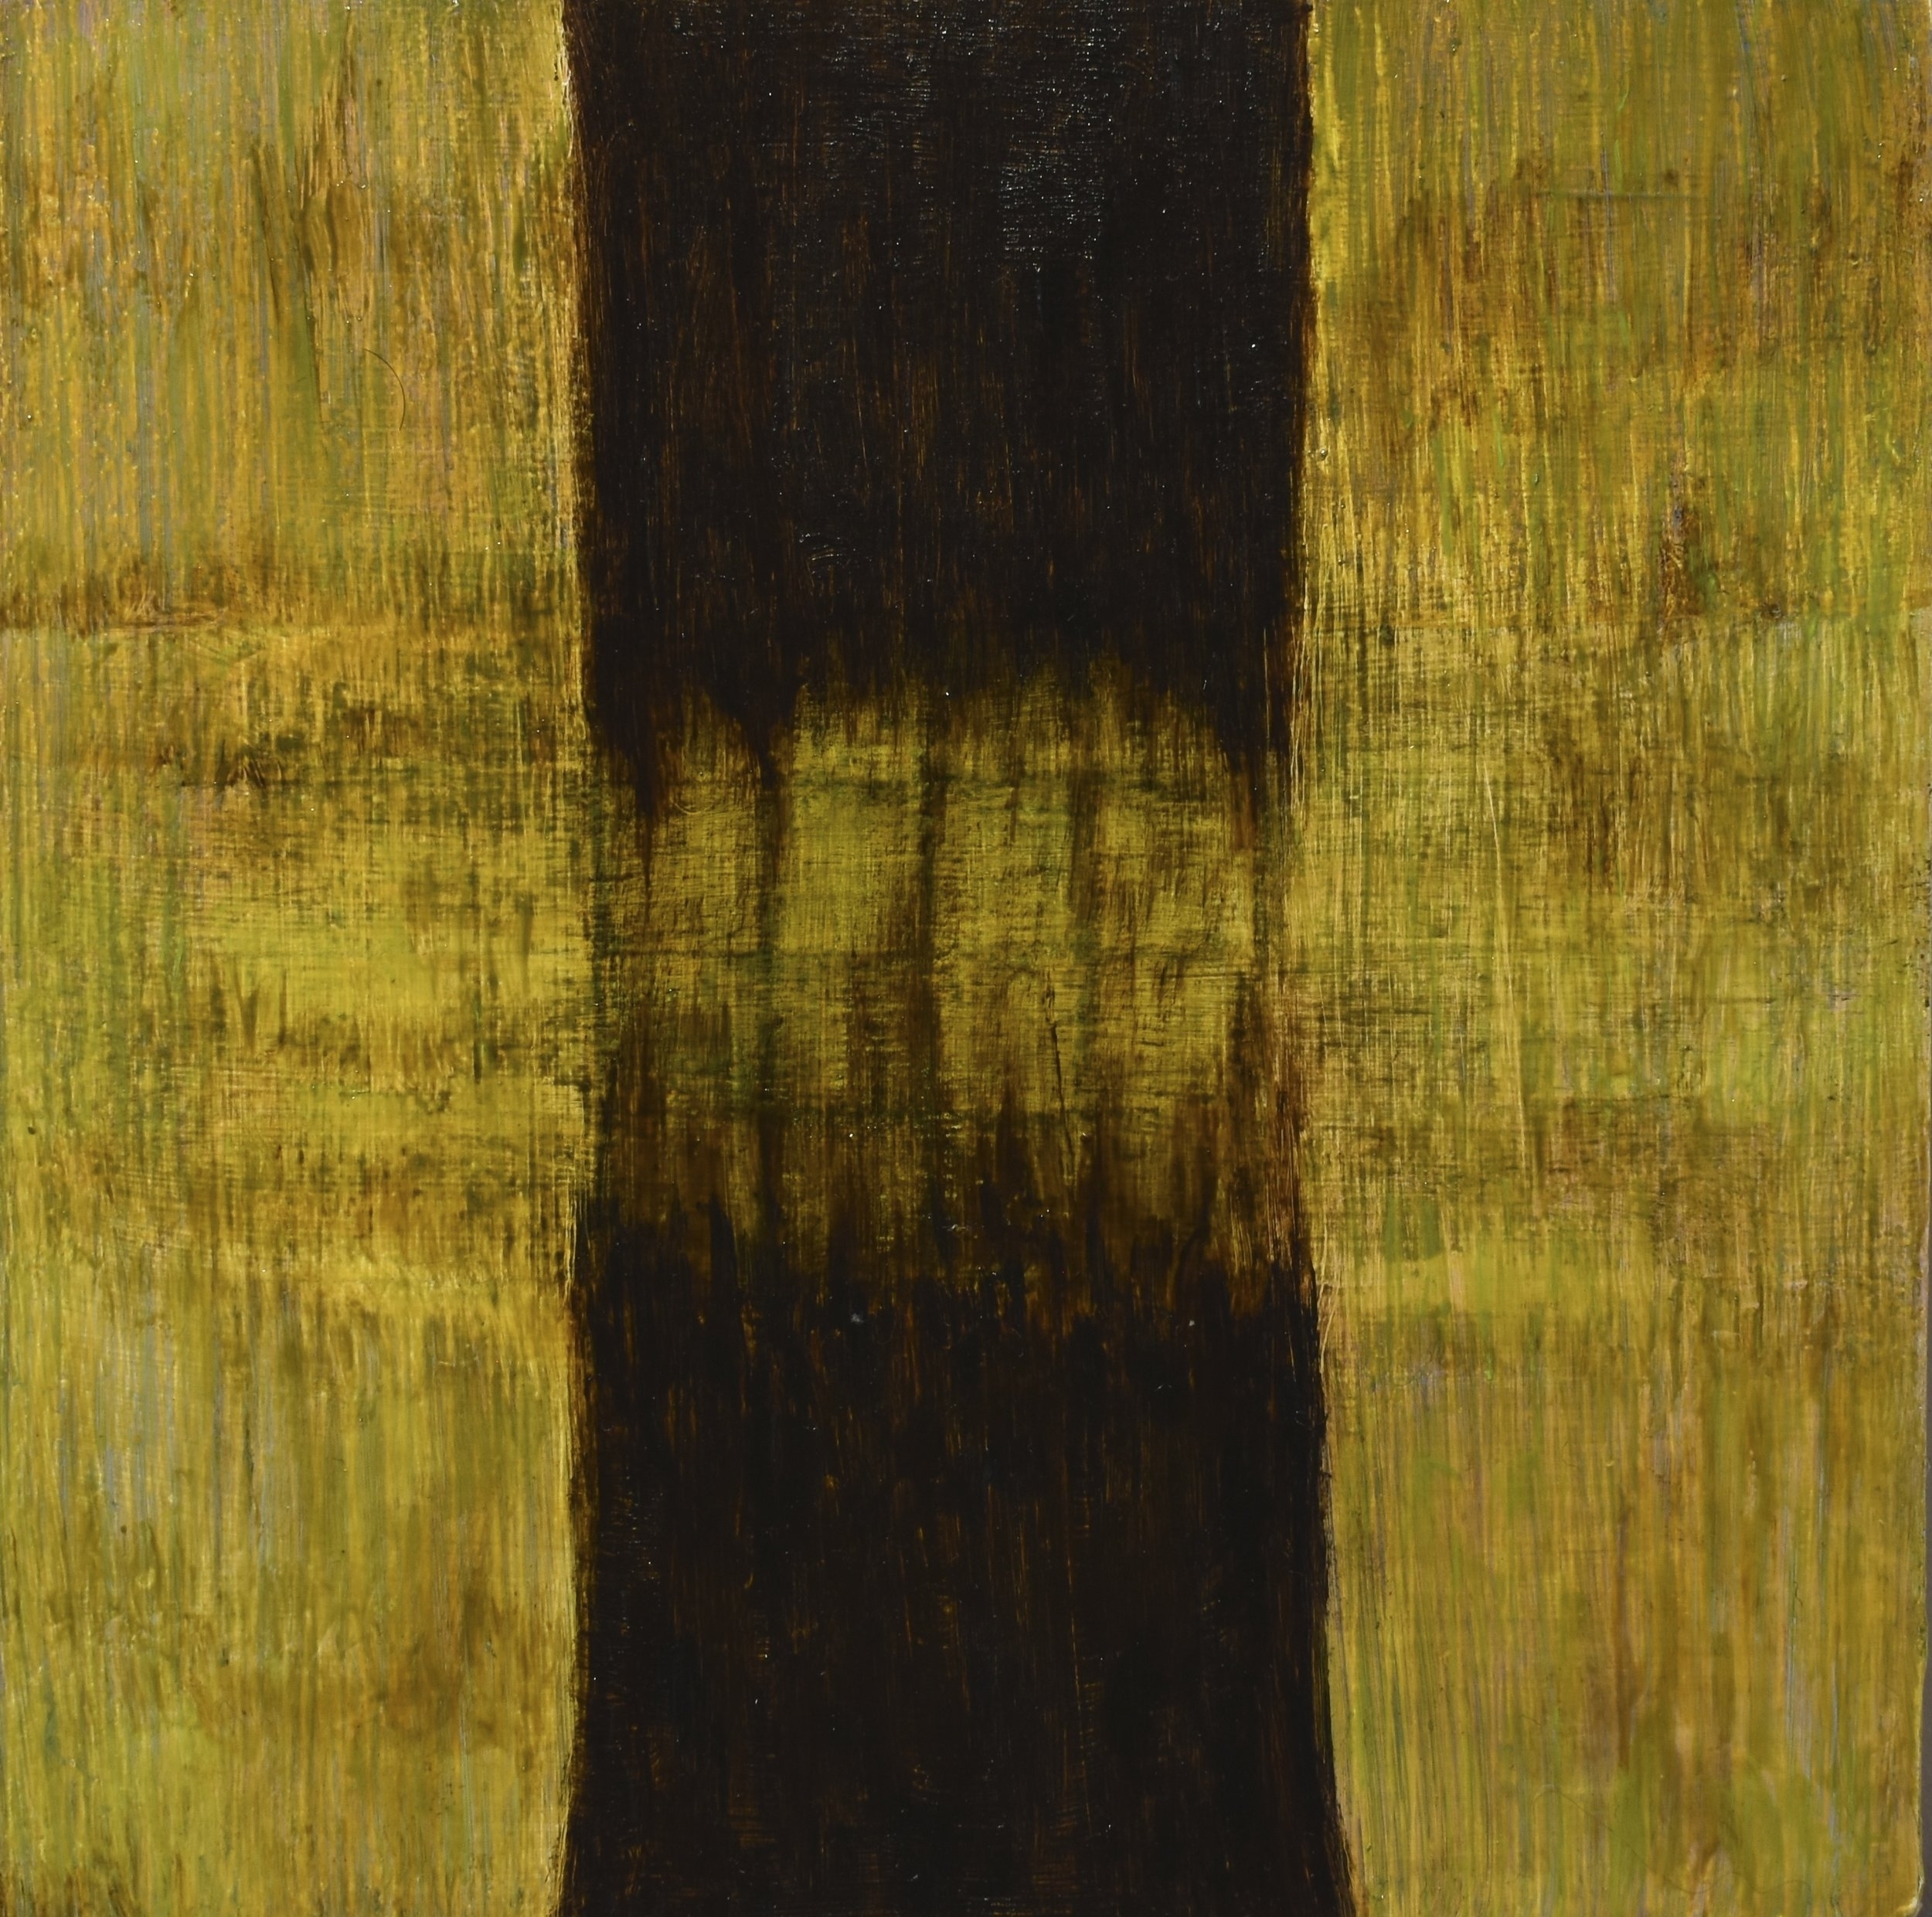  splinter, 2017 oil on wood panel, 12.5 x 12.5 cm 